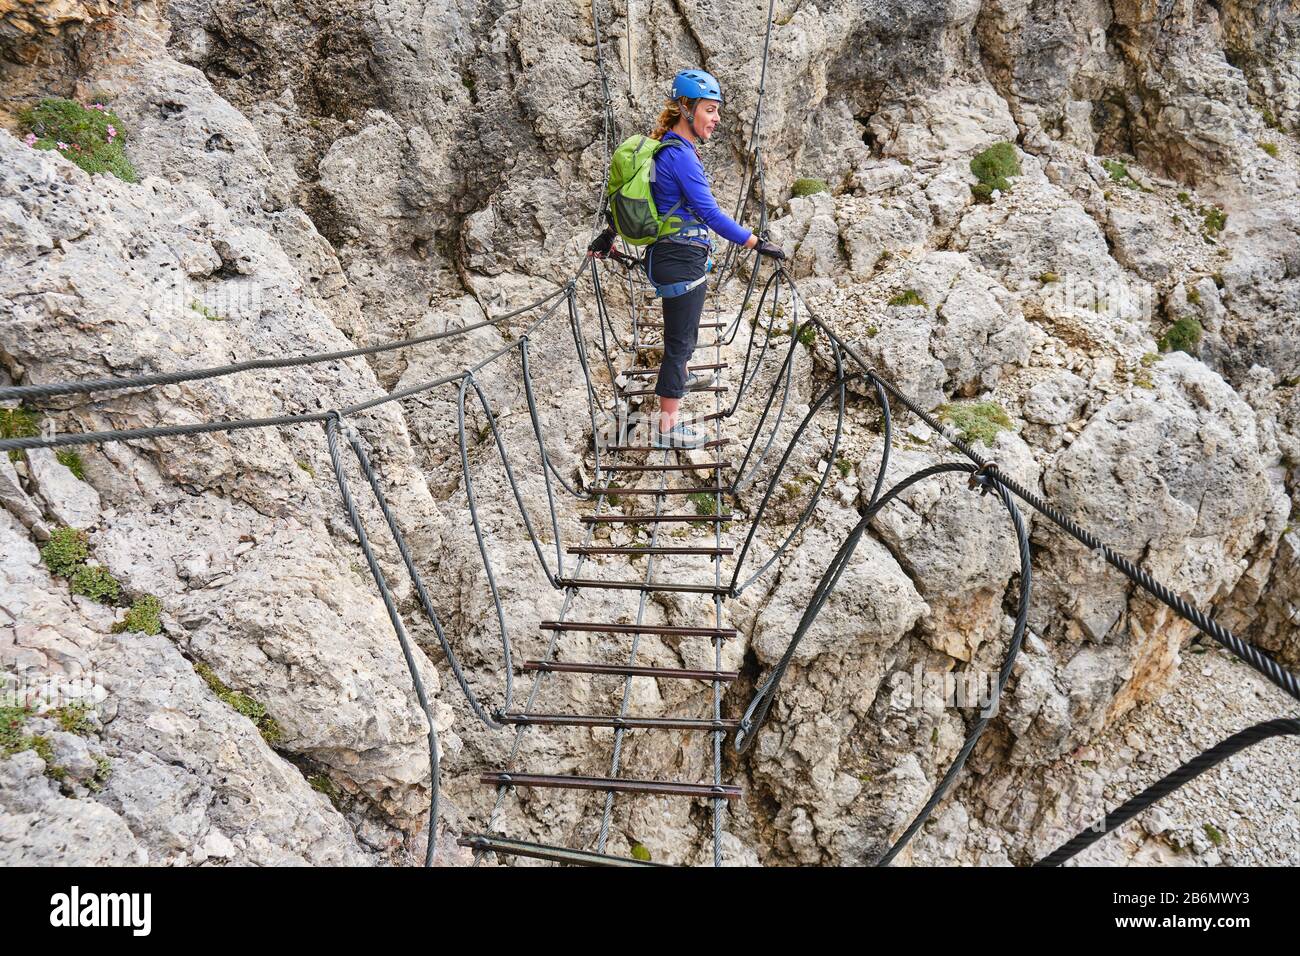 Woman on a via ferrata suspended wire bridge at Cesare Piazzetta klettersteig route, Sella group, Dolomites mountains, Italy. Stock Photo